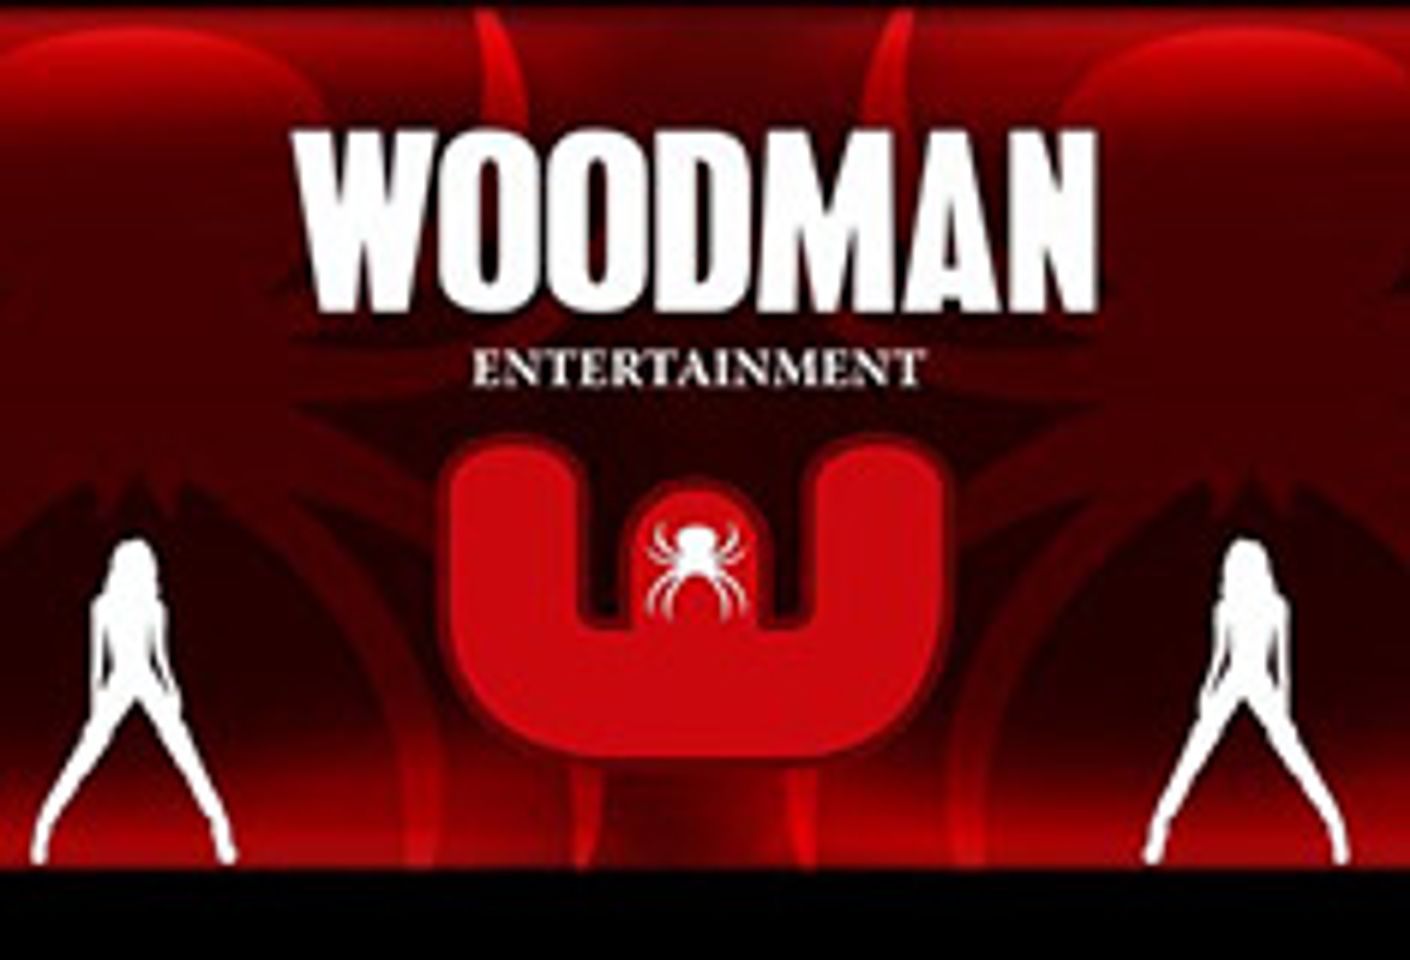 Pierre Woodman Launches Woodman Entertainment